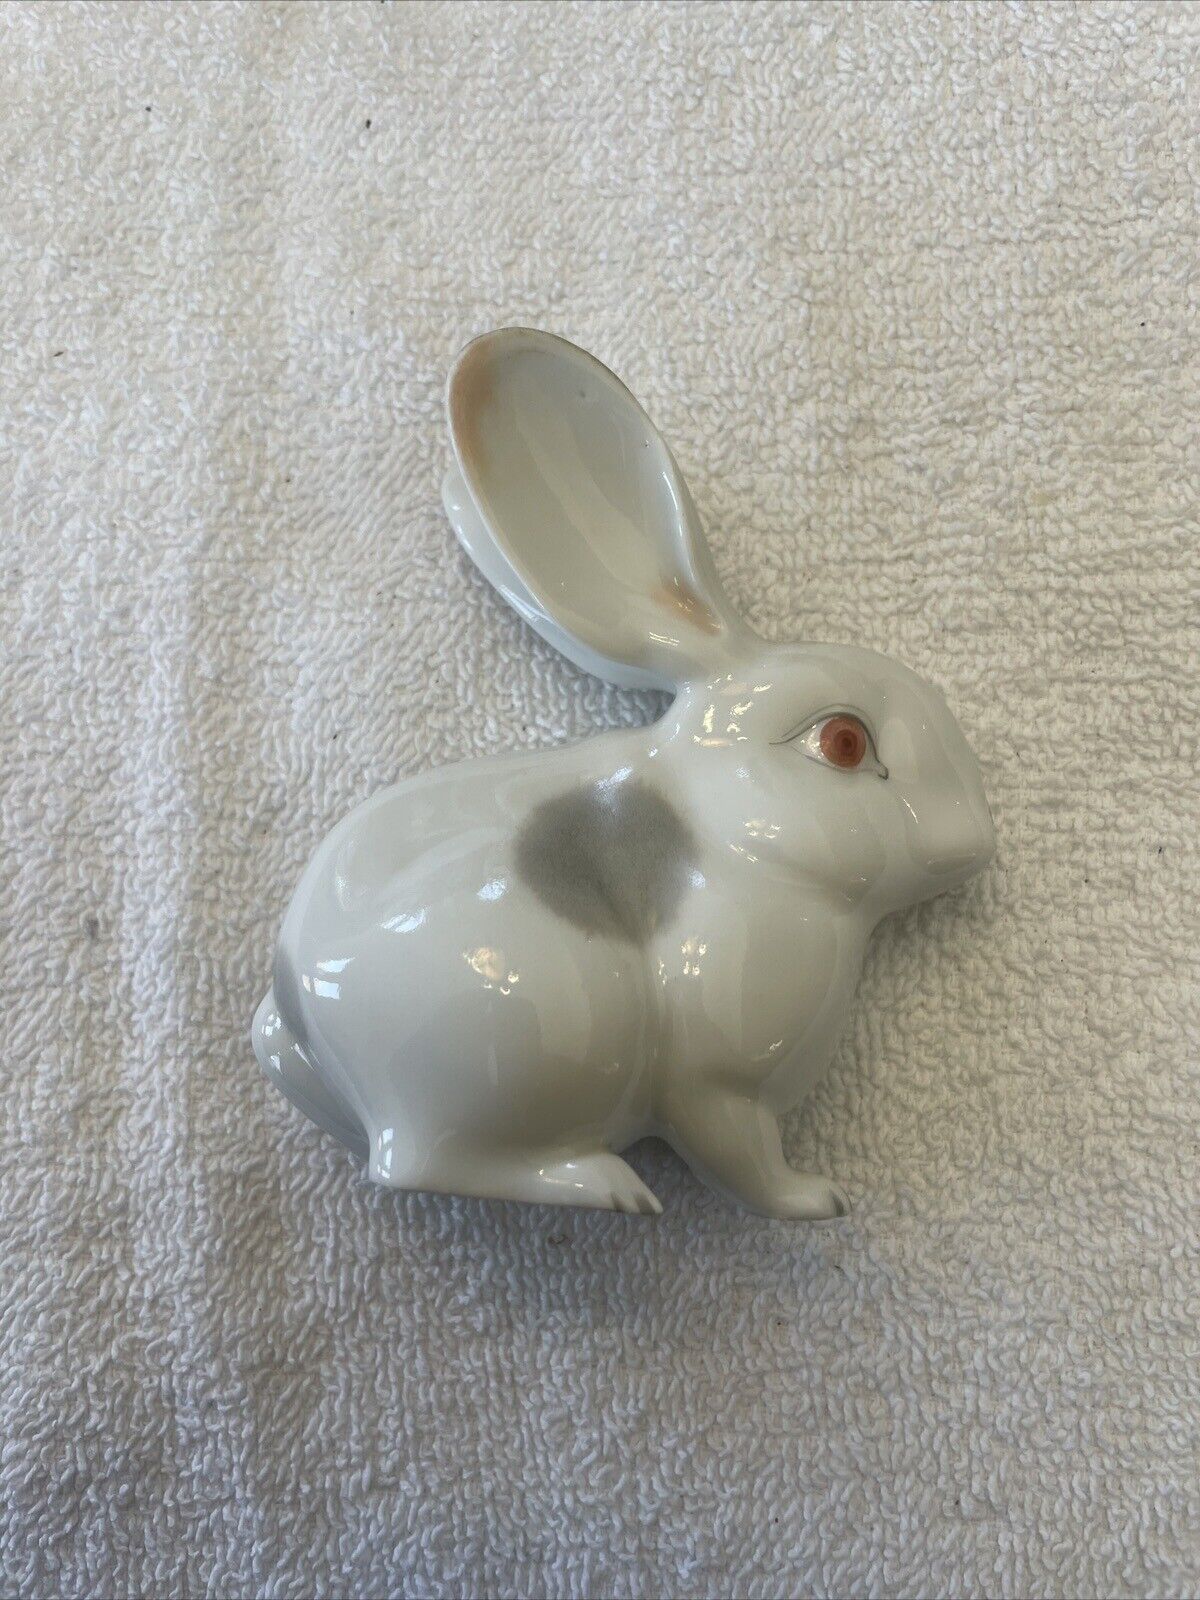 Vintage KPM Porcelain Bunny Rabbit Figurine Germany.   Very Cute